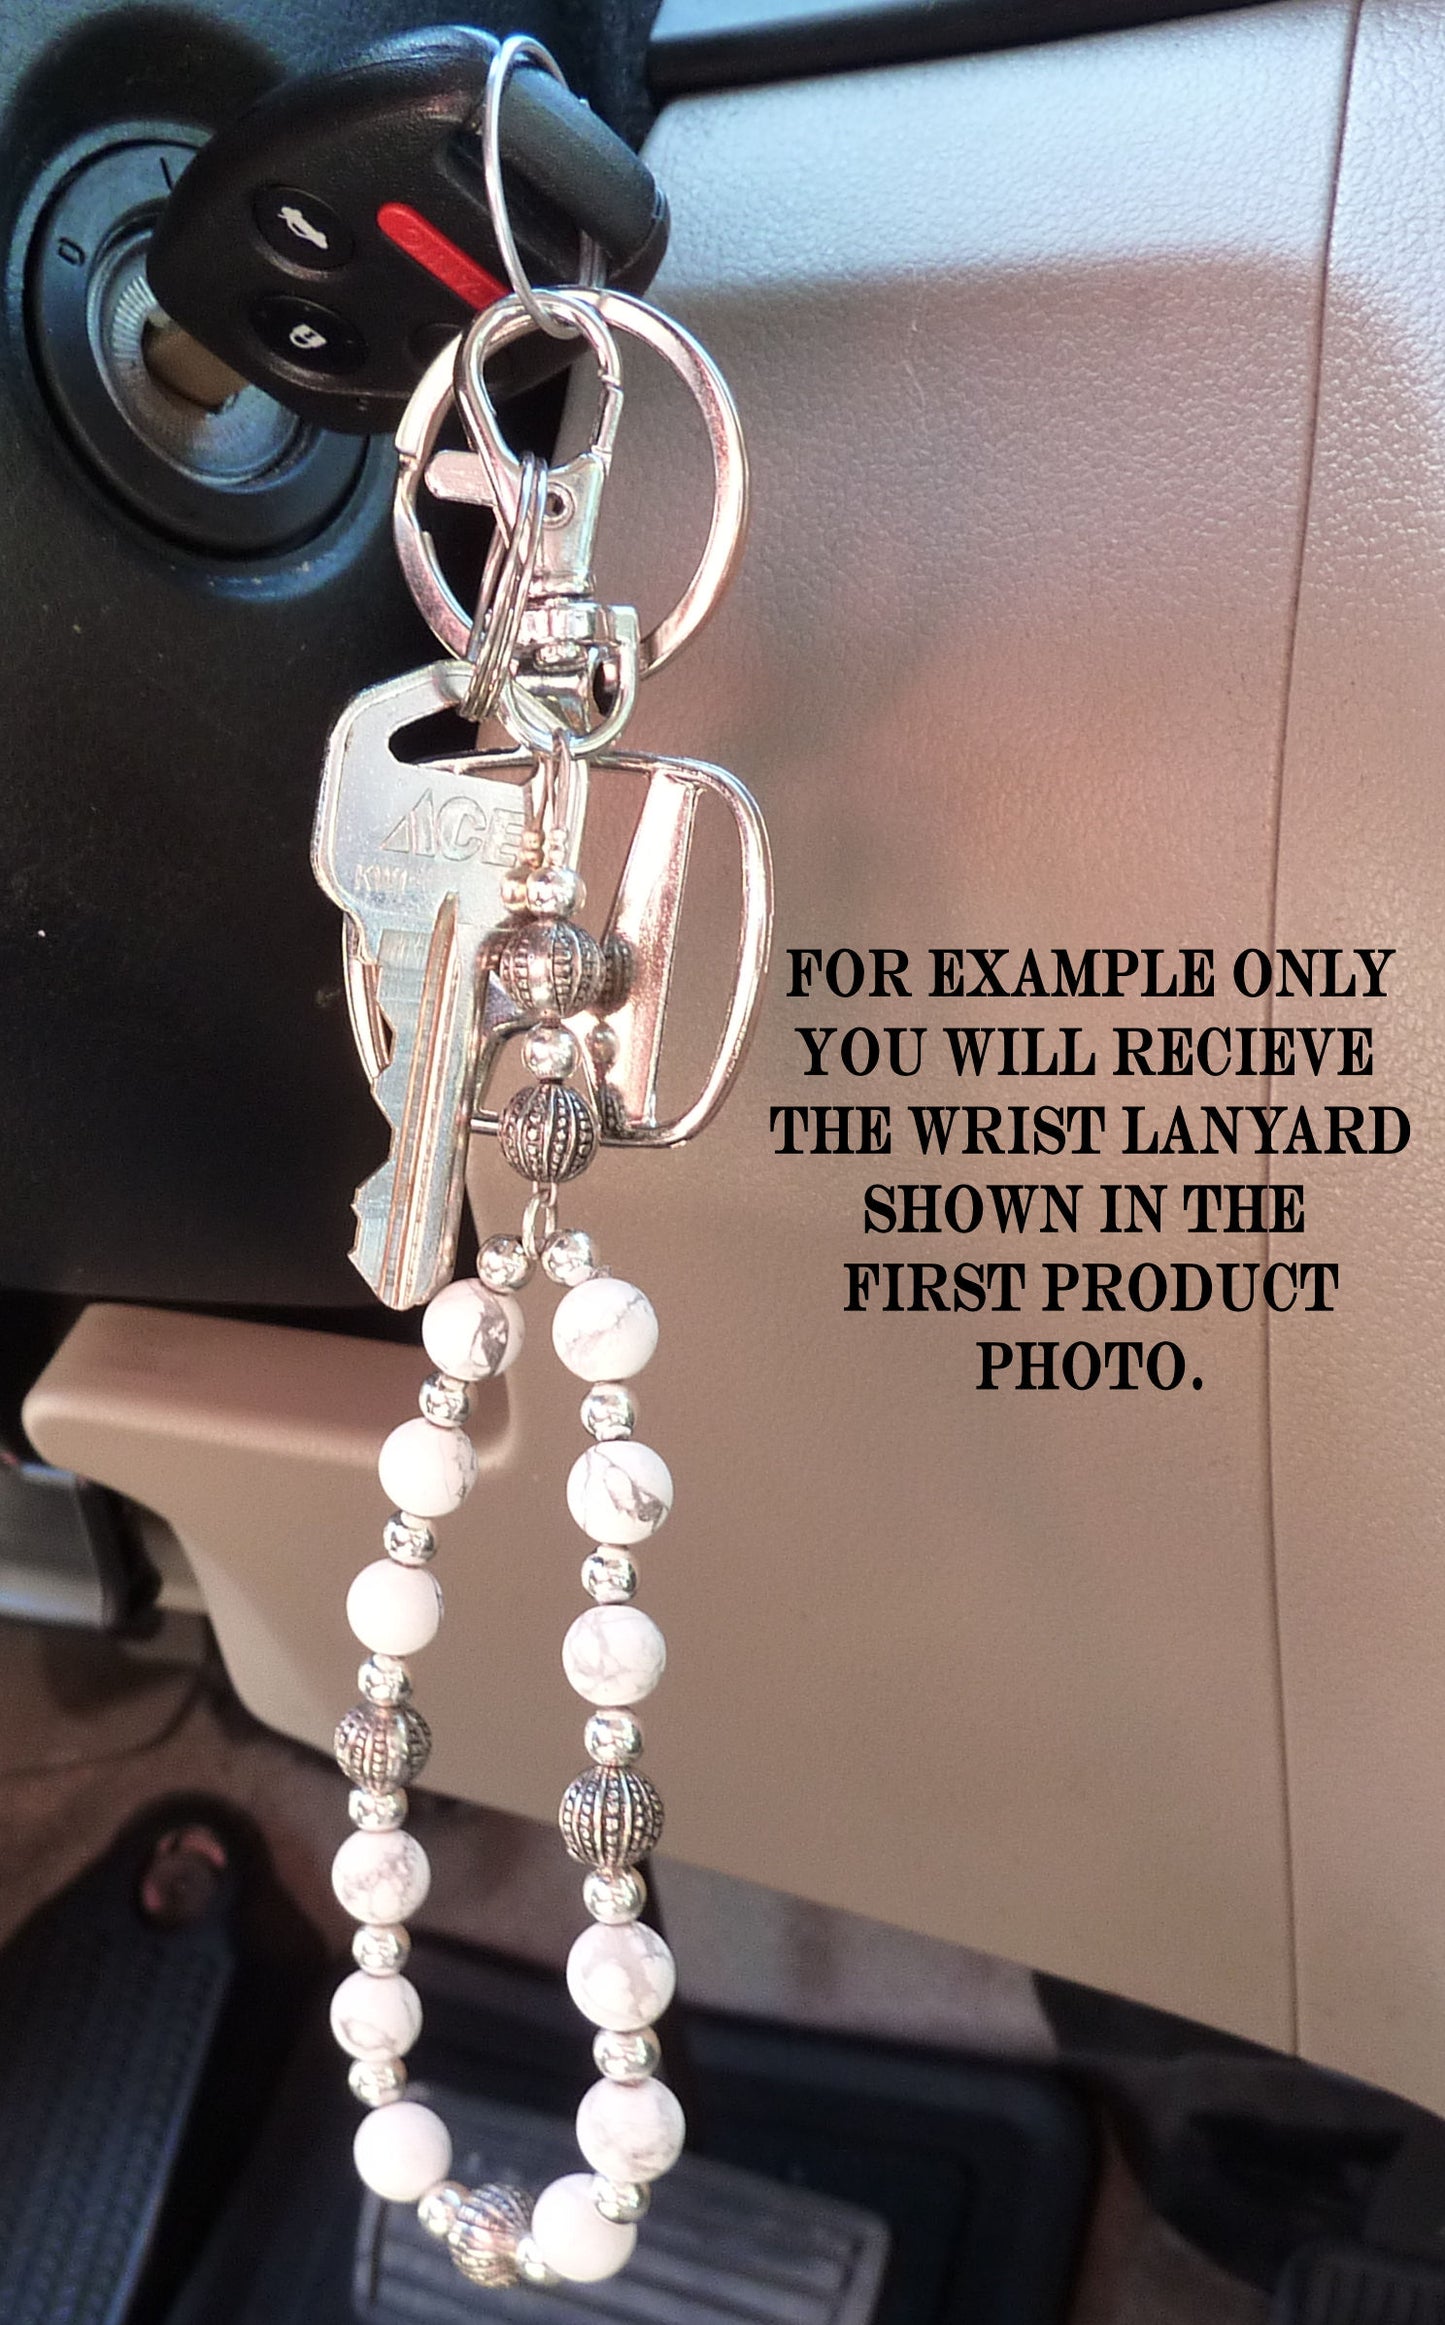 Wrist Lanyard, Beaded Women's Wristlet for Keys, Phone, ID Badge, Lightweight and Strong - White